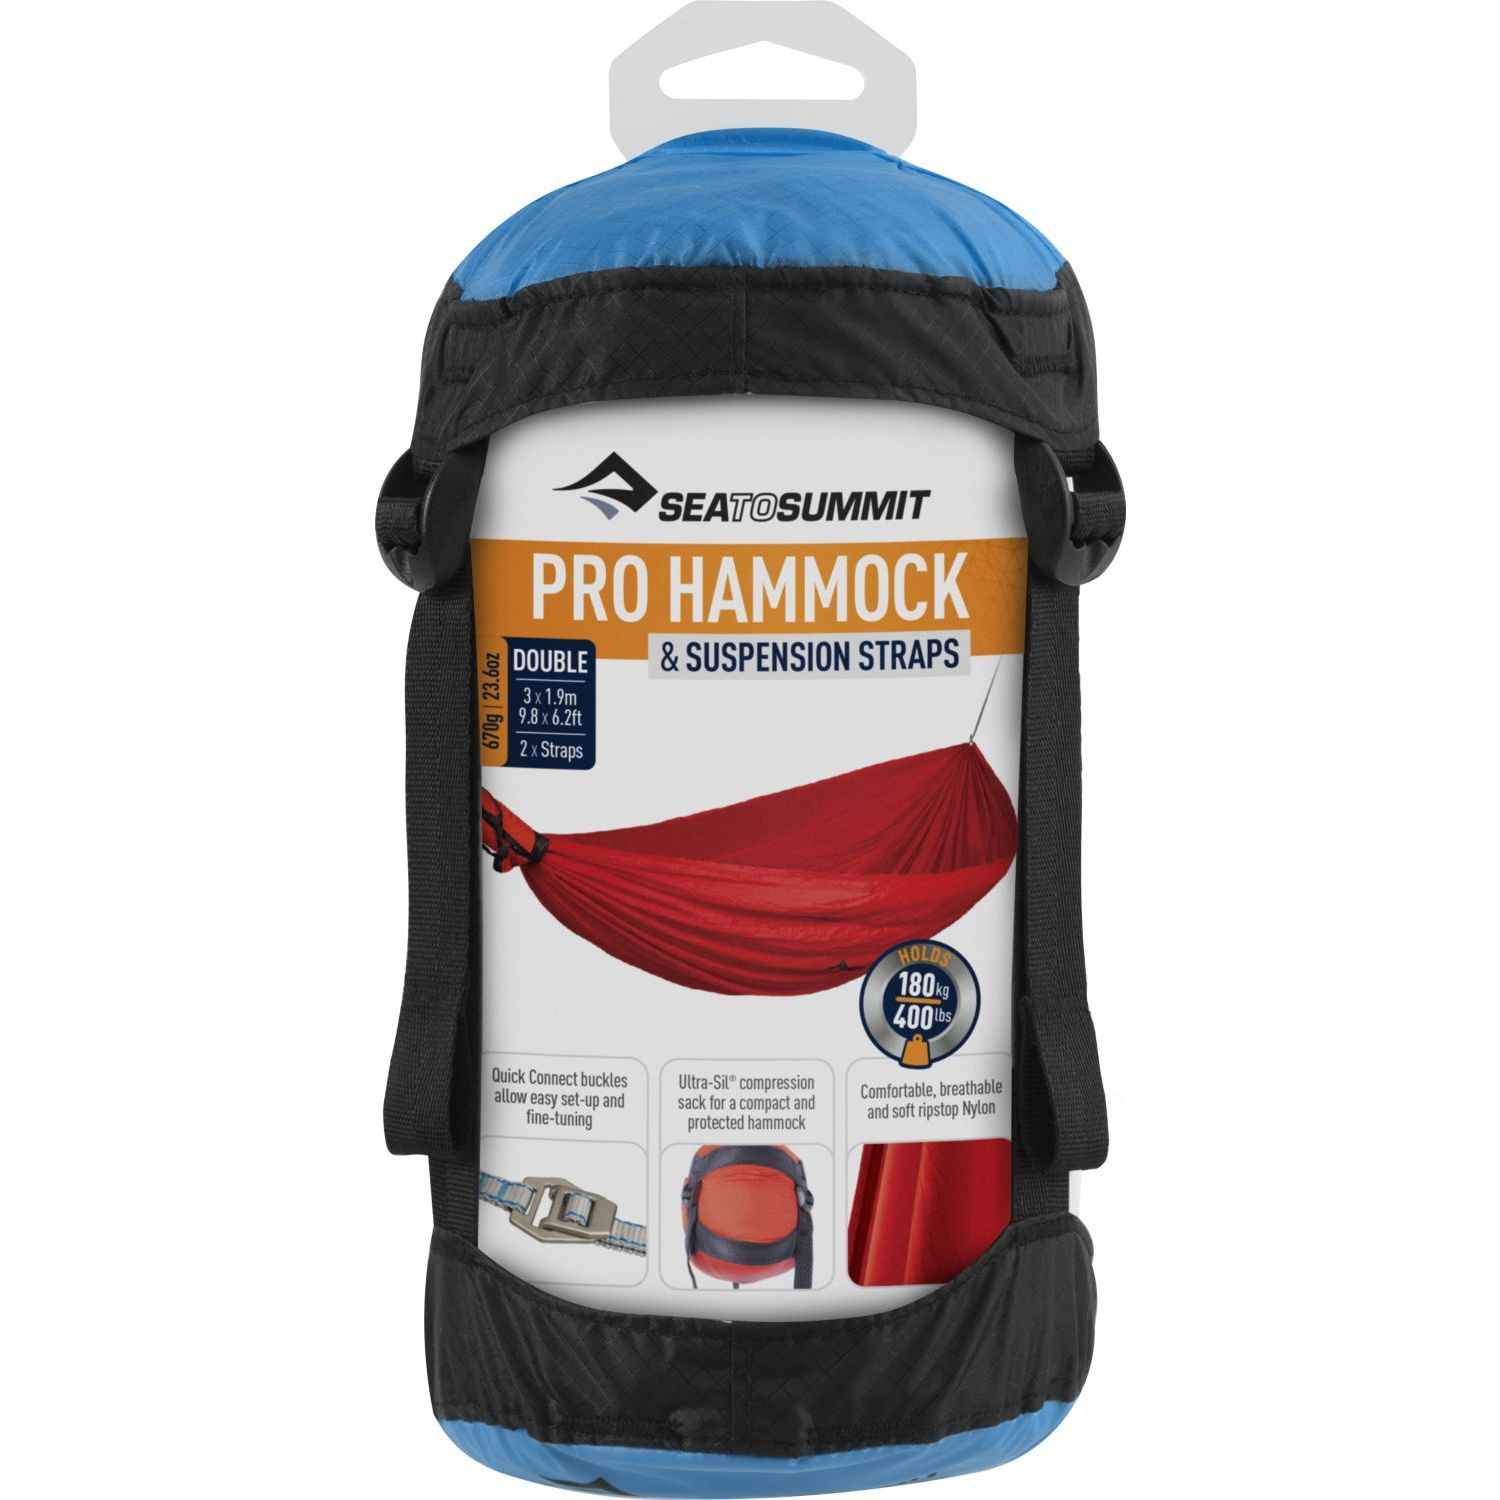 Hammock Set Pro Double